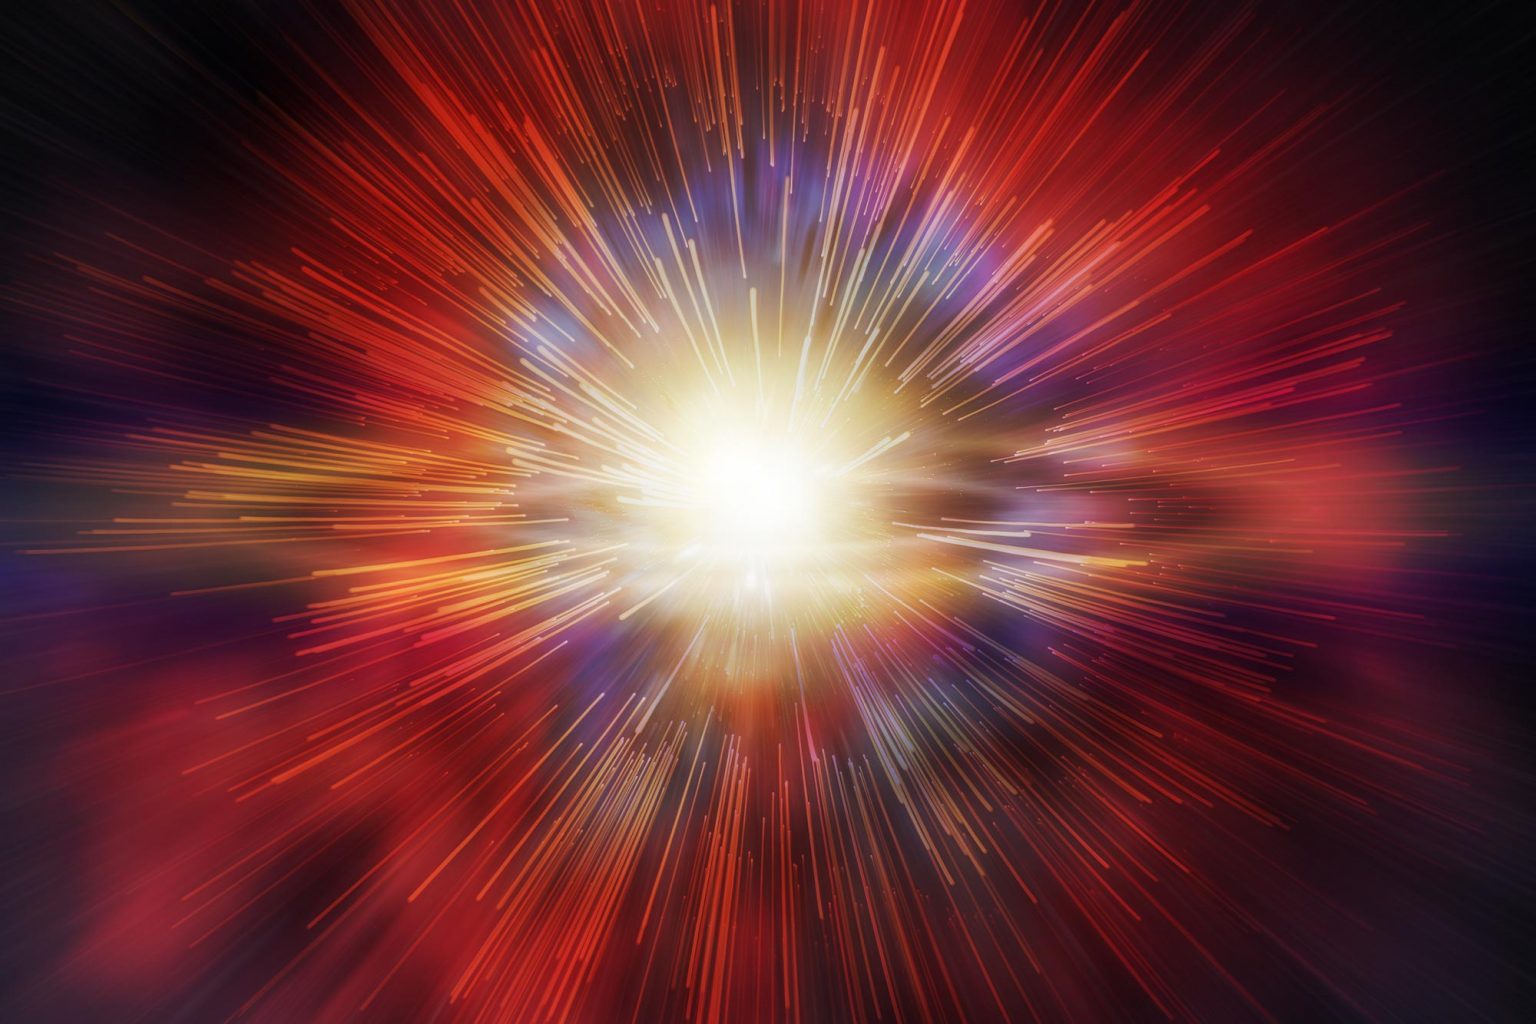 Binary Star V Sagittae Will Explode by Century’s End “Startlingly